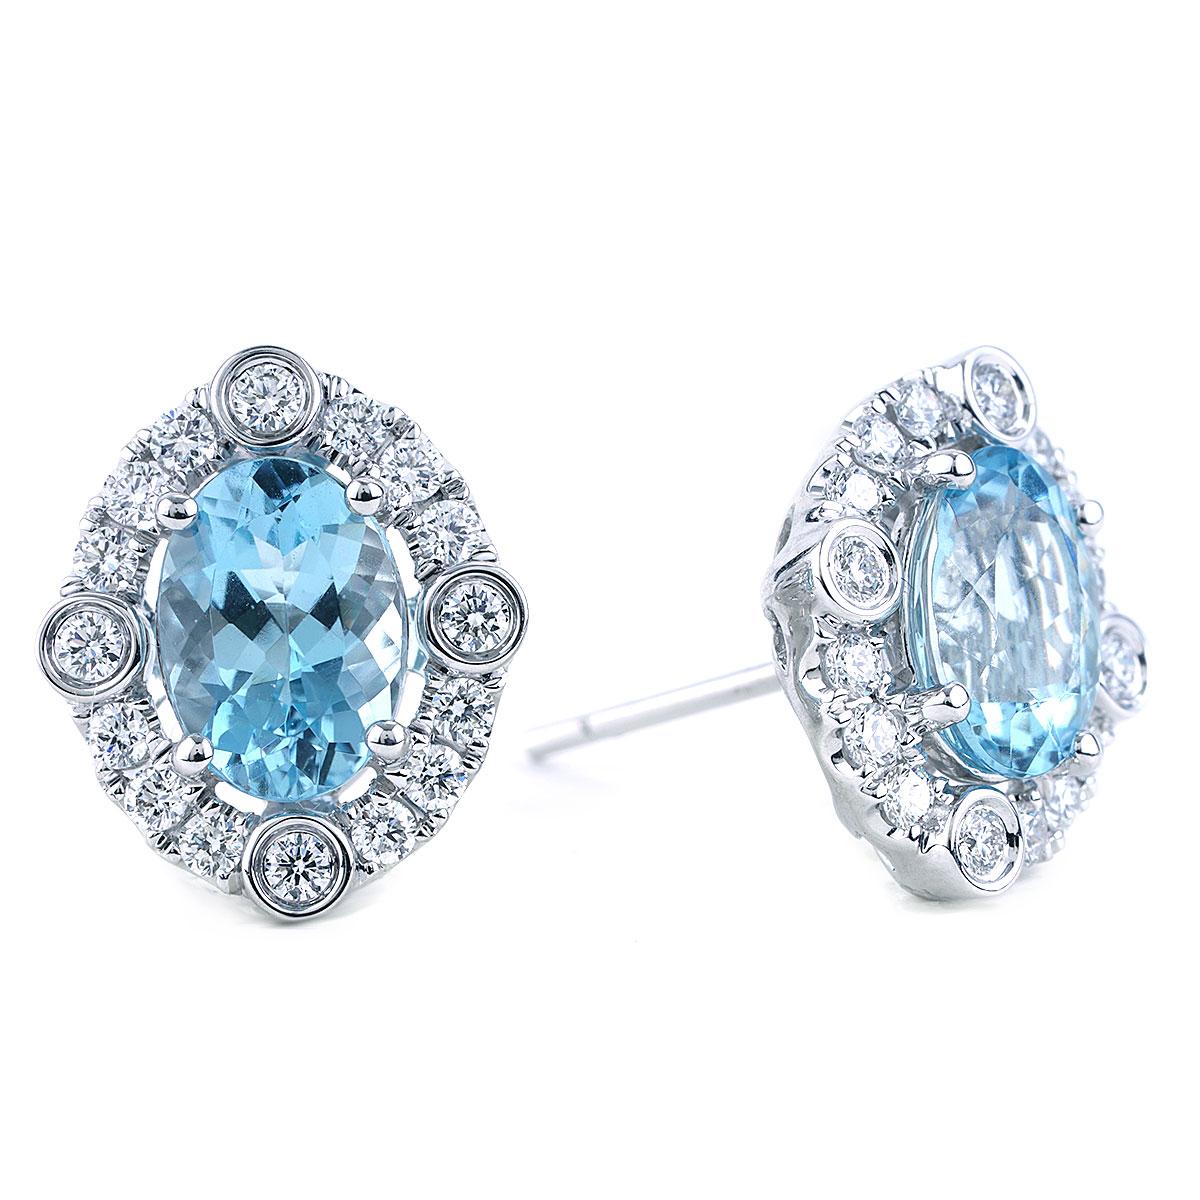 Oval Halo Diamond Drop Earrings | Wixon Jewelers